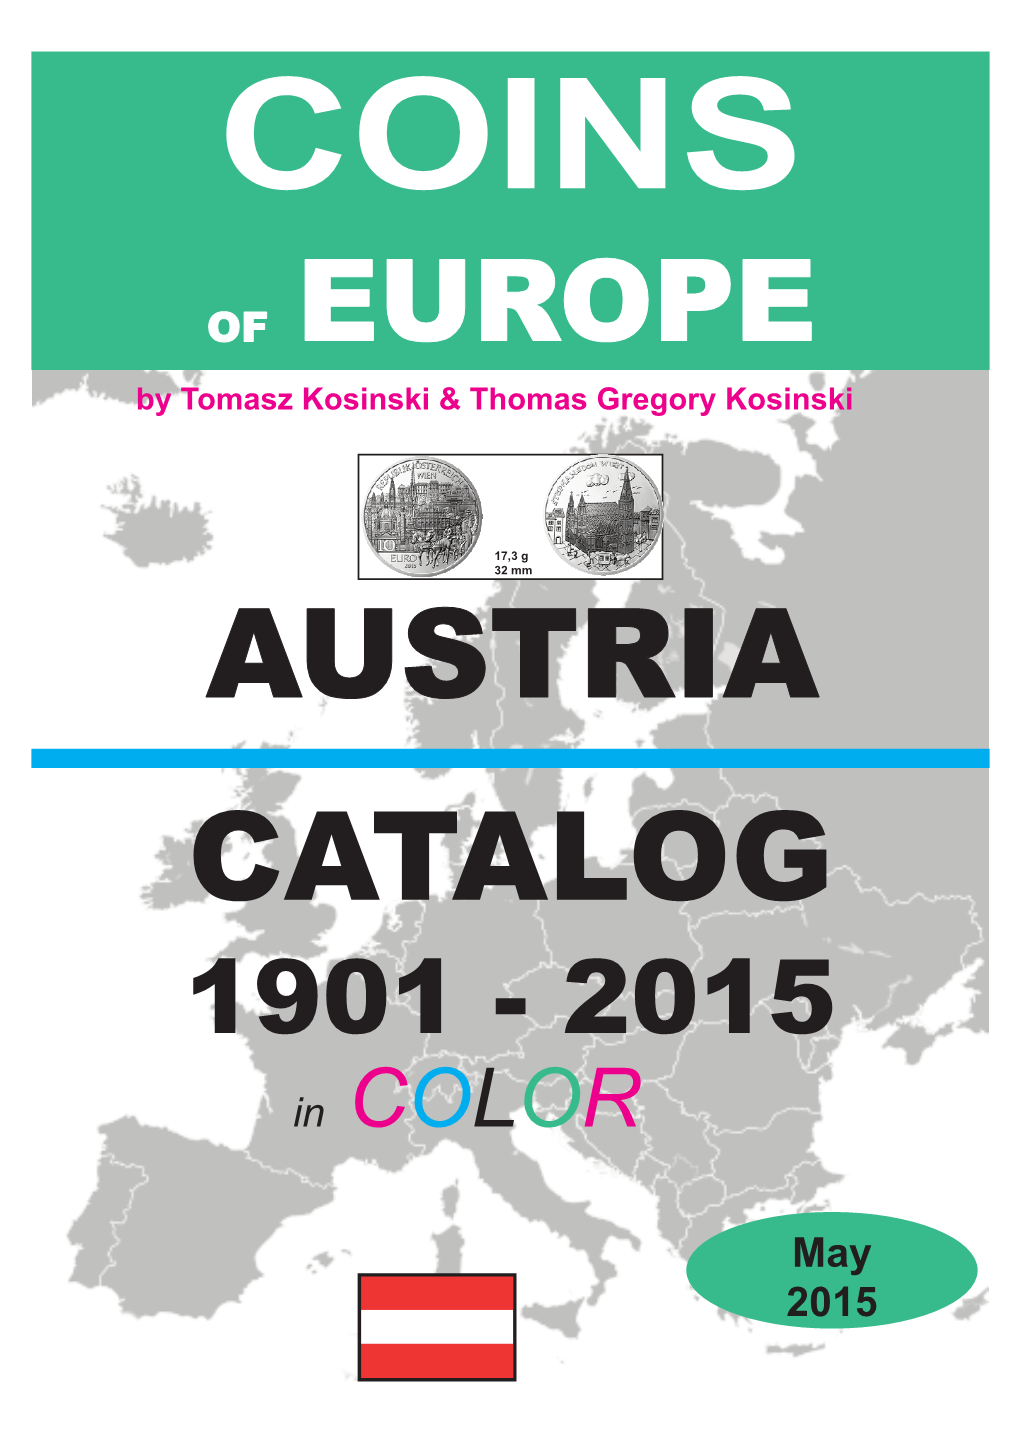 OF EUROPE by Tomasz Kosinski & Thomas Gregory Kosinski